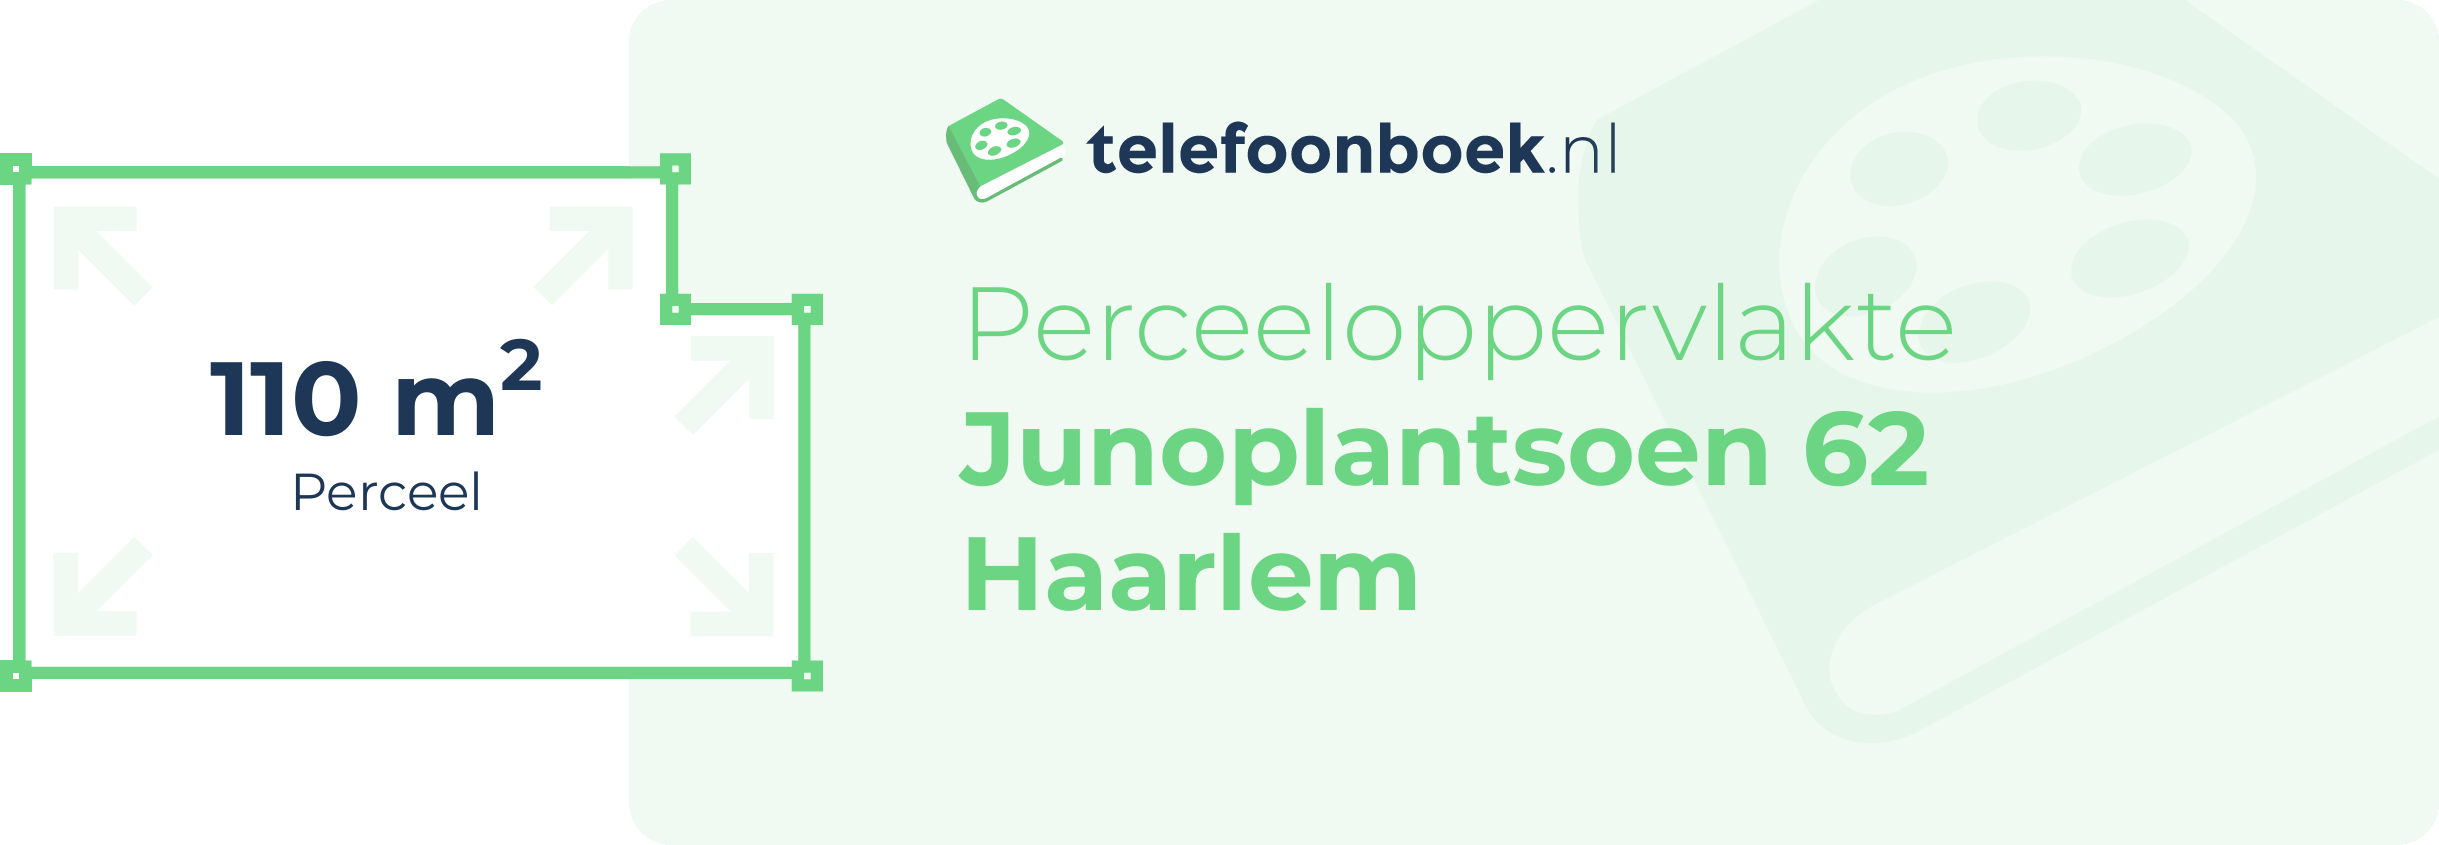 Perceeloppervlakte Junoplantsoen 62 Haarlem